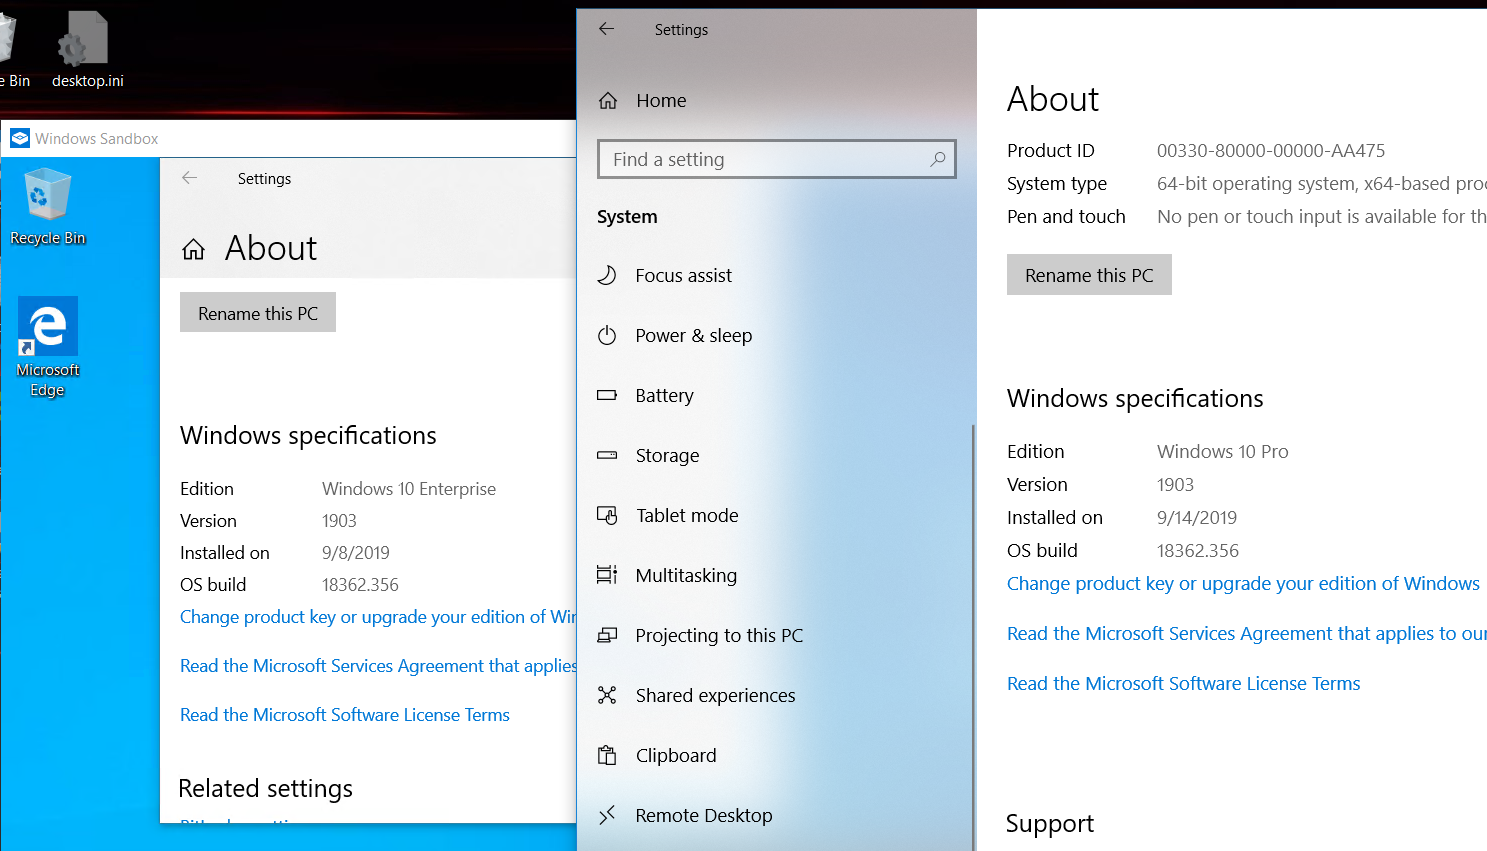 Windows 10 Pro - windows sandbox shows unactivated Windows 10 Enterprise efc81eee-008c-47b6-8d2d-89401d1ce929?upload=true.png